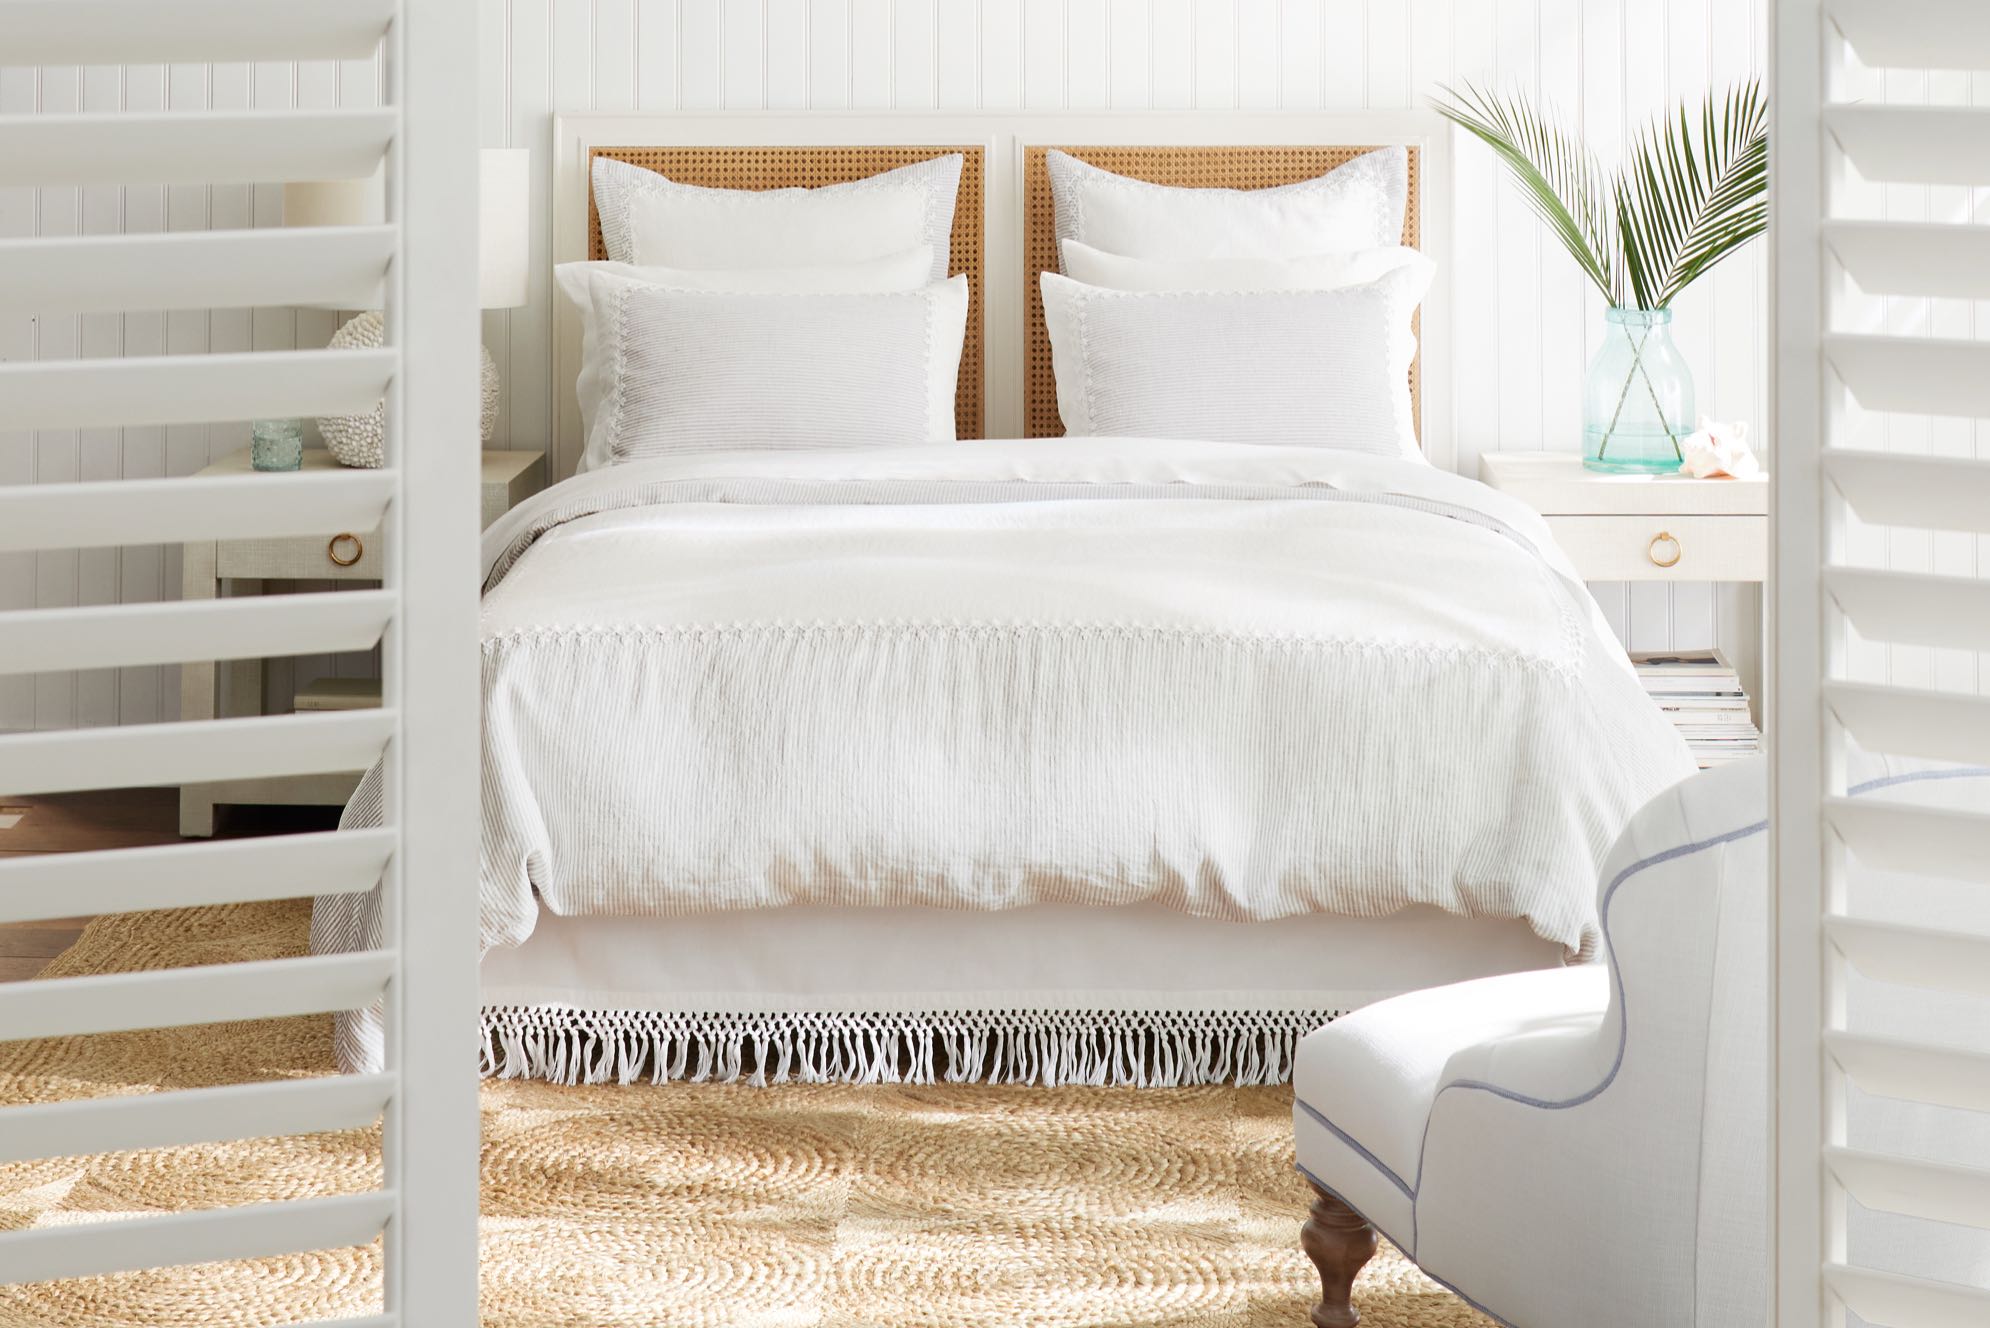 Serena & Lily bedroom - bedroom - white bedroom - white bedding - summer bedding - bedroom design - bedroom decor